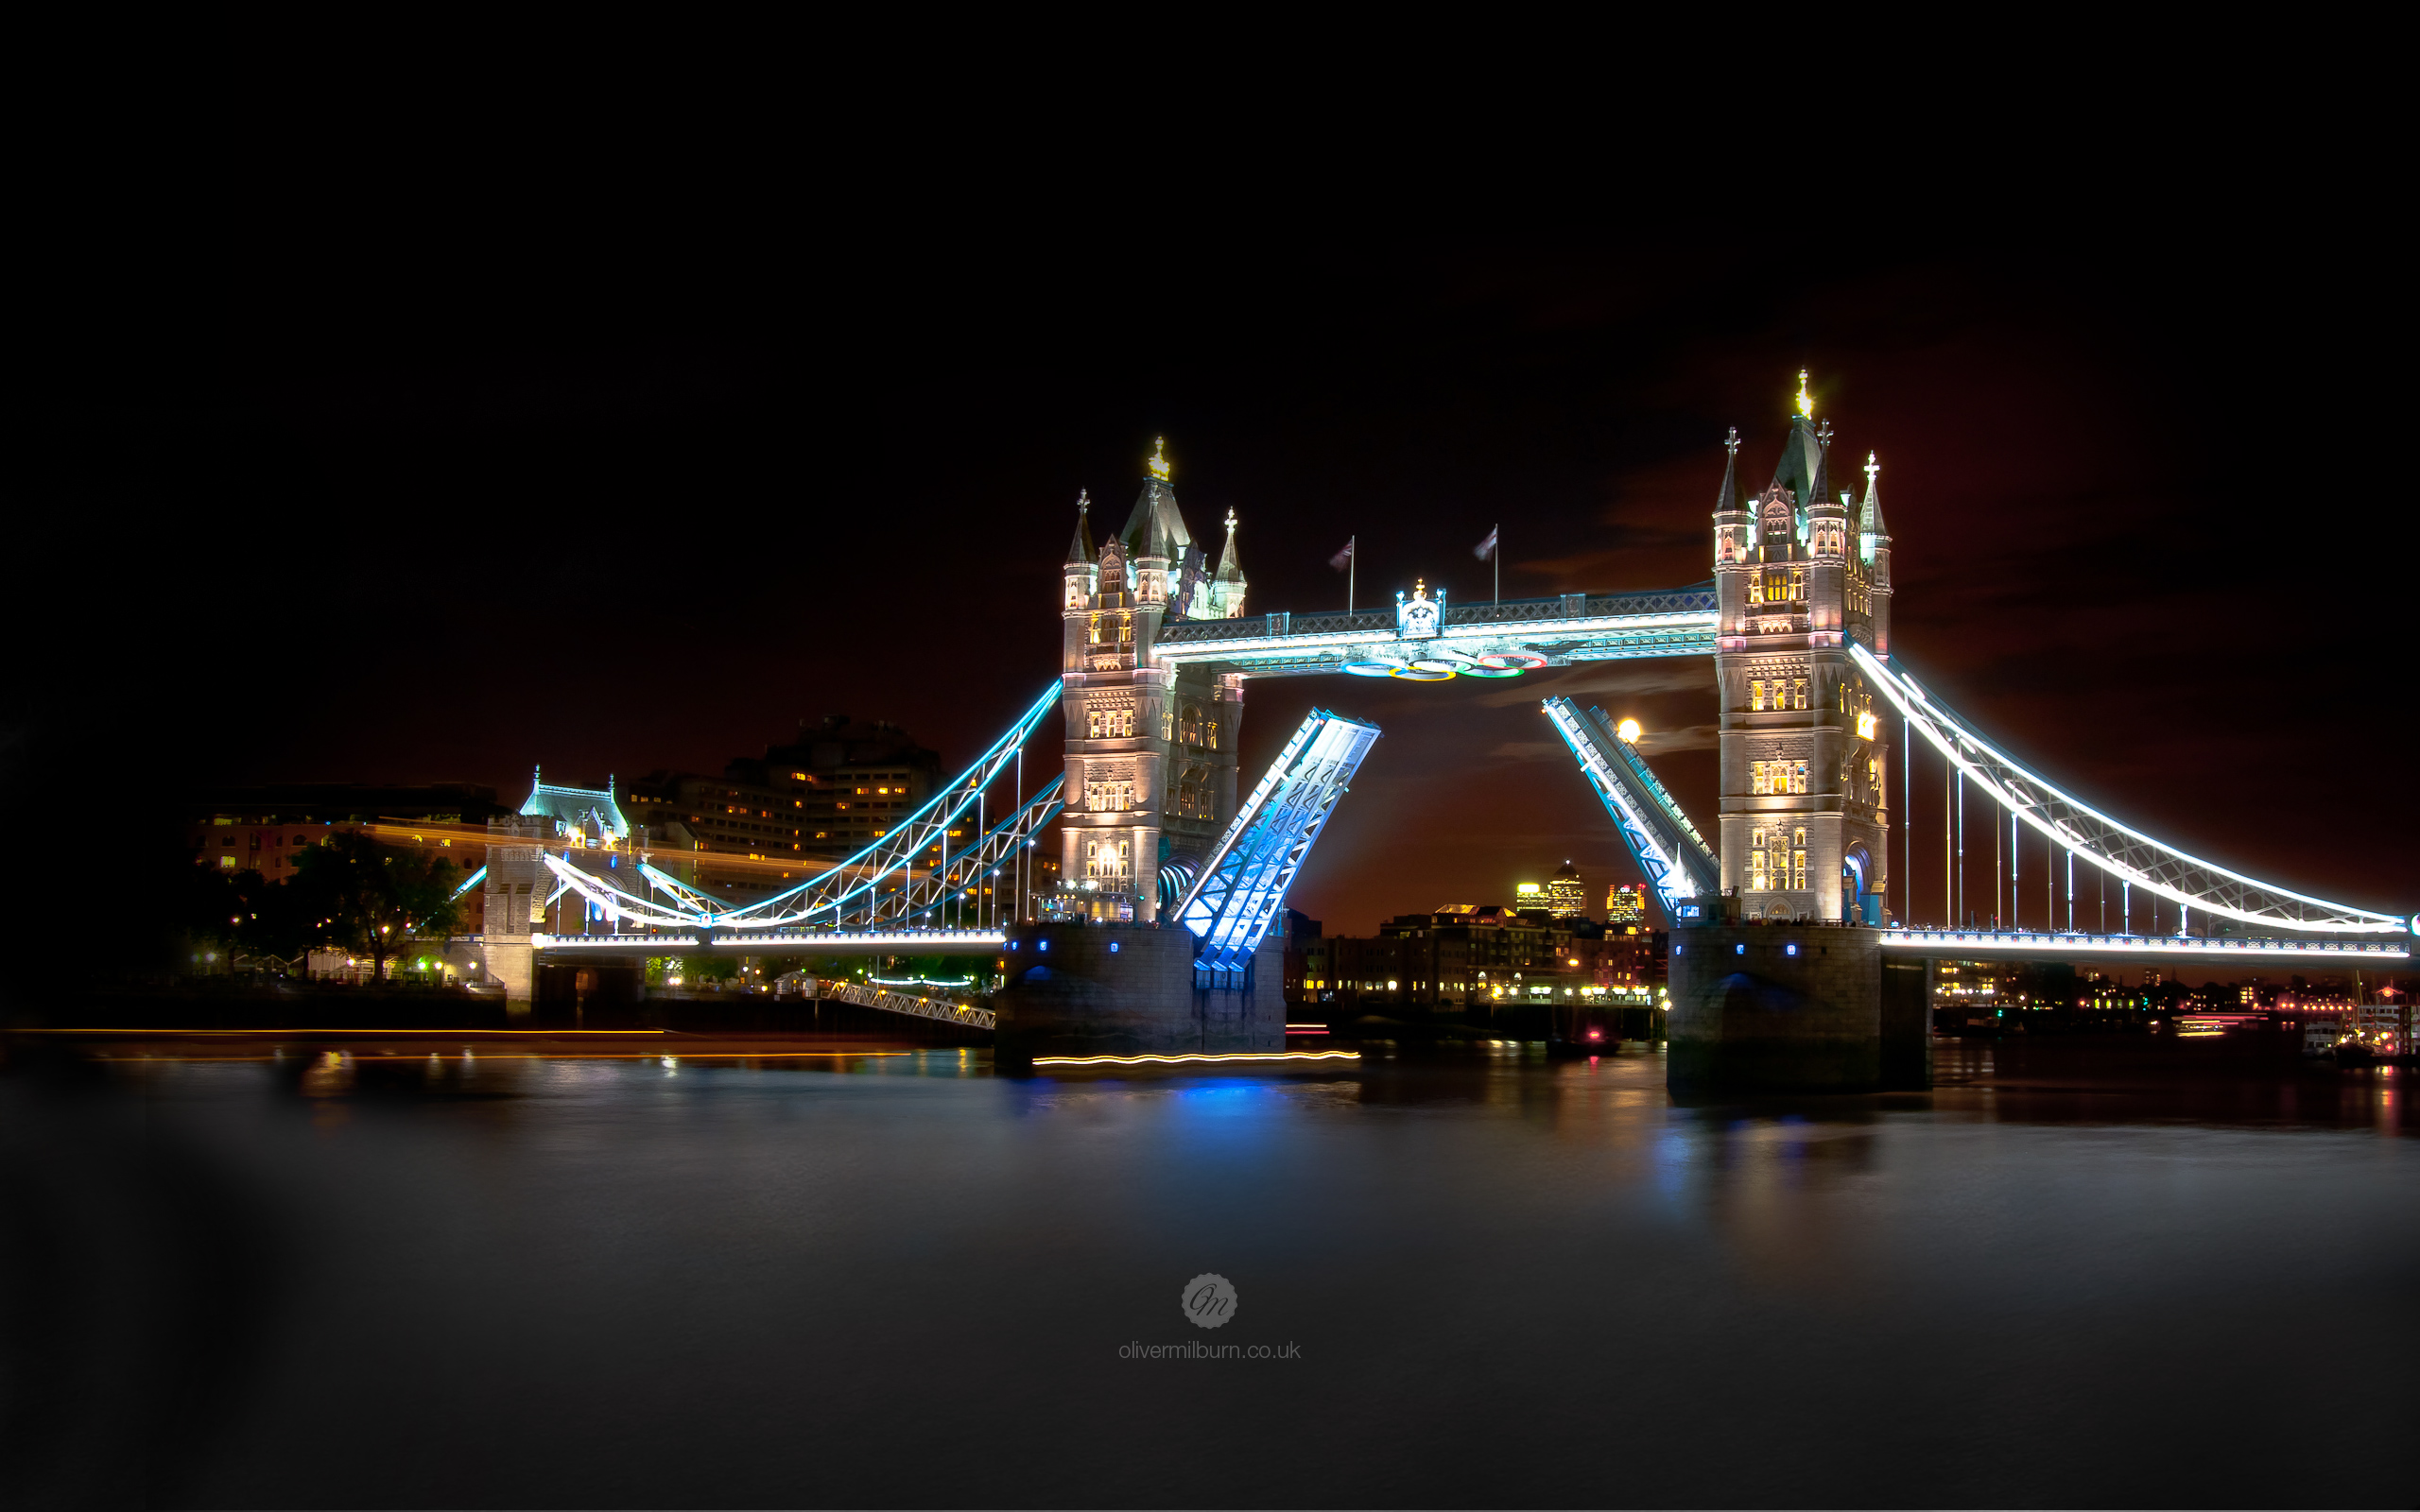  Olympics London 2012 Desktop Wallpaper 2560x1600 by Oliver Milburn